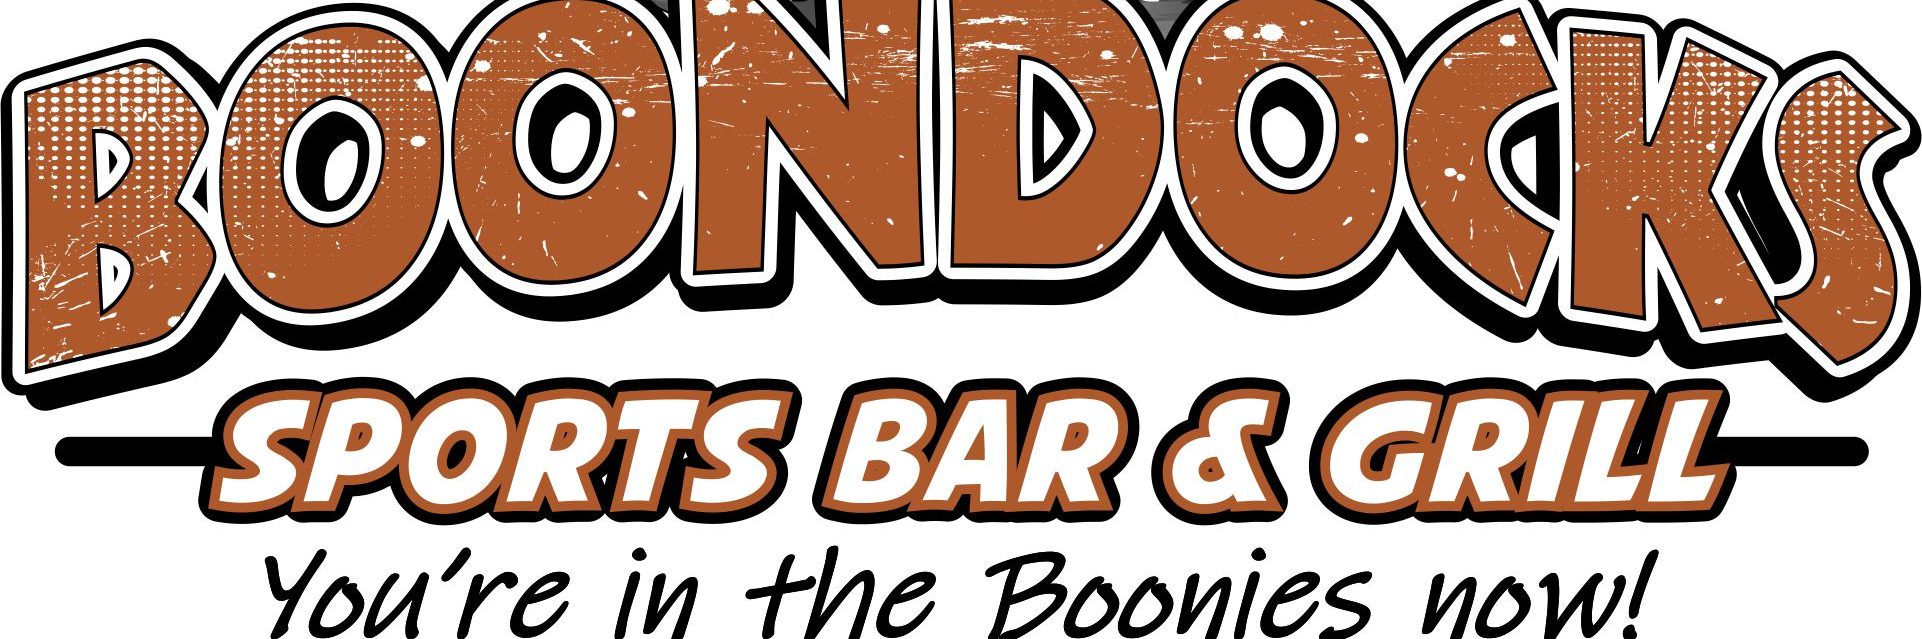 Boondocks Sports Bar